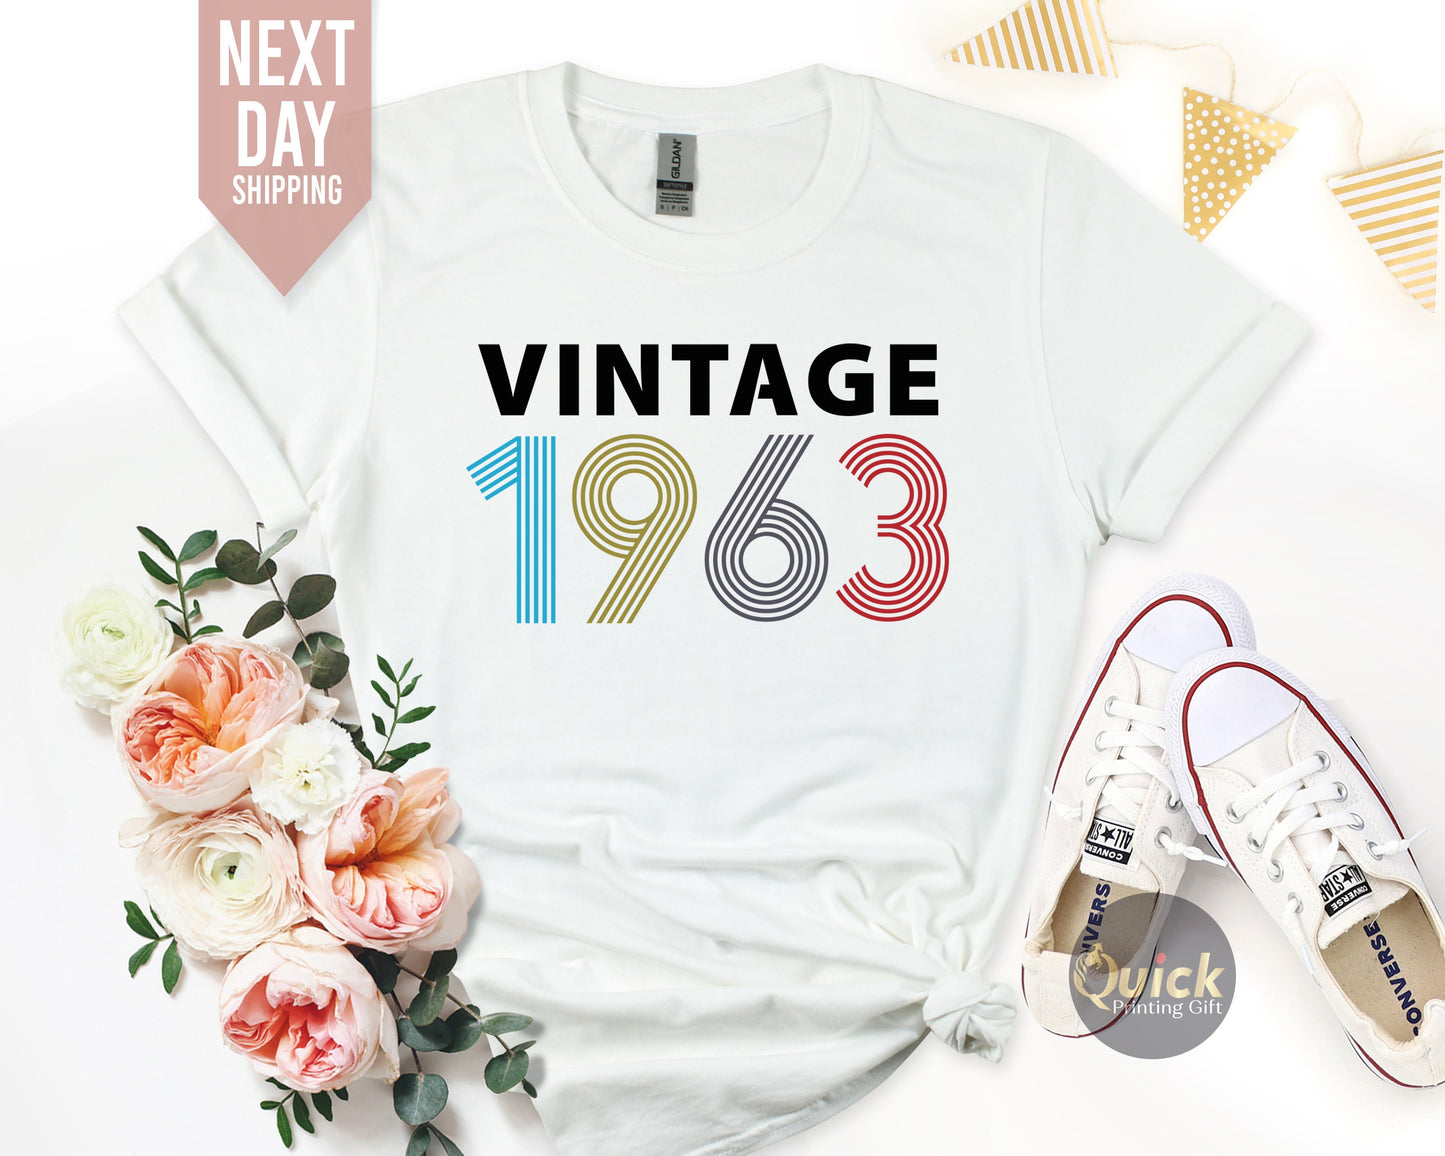  Vintage 1963 T-Shirt